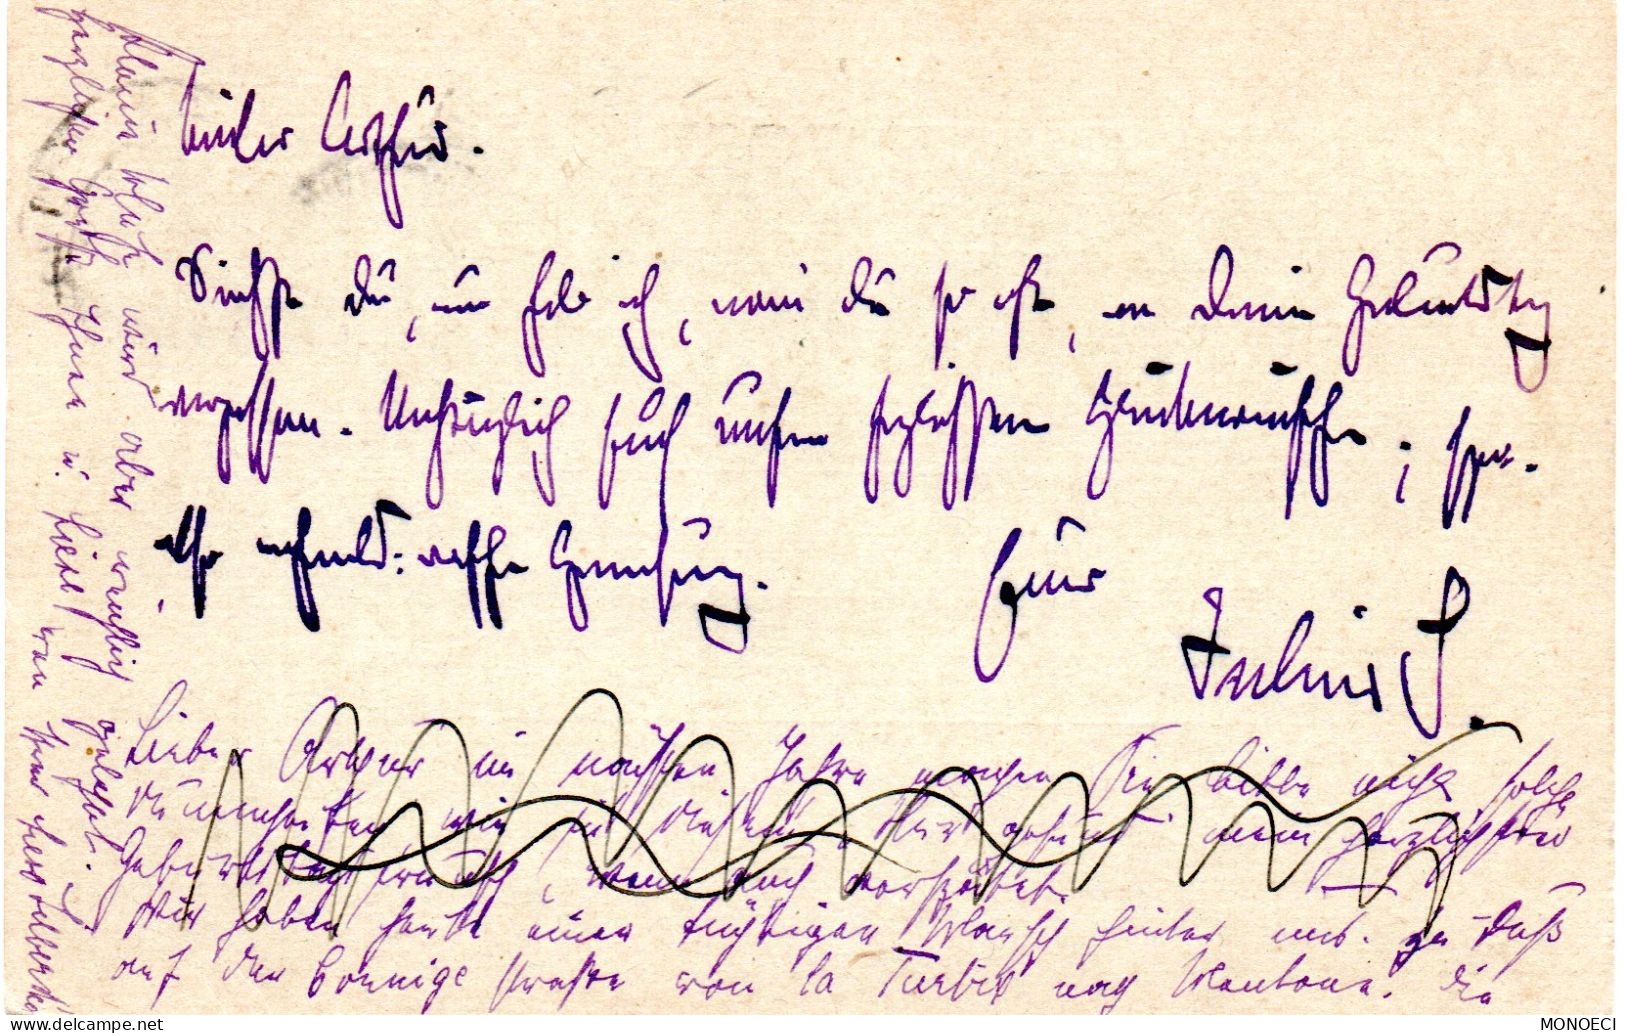 MONACO -- MONTE CARLO -- Entier Postal -- Carte Postale -- Prince Albert 1er -- 10 C. Rouge Sur Vert (1901) - Entiers Postaux